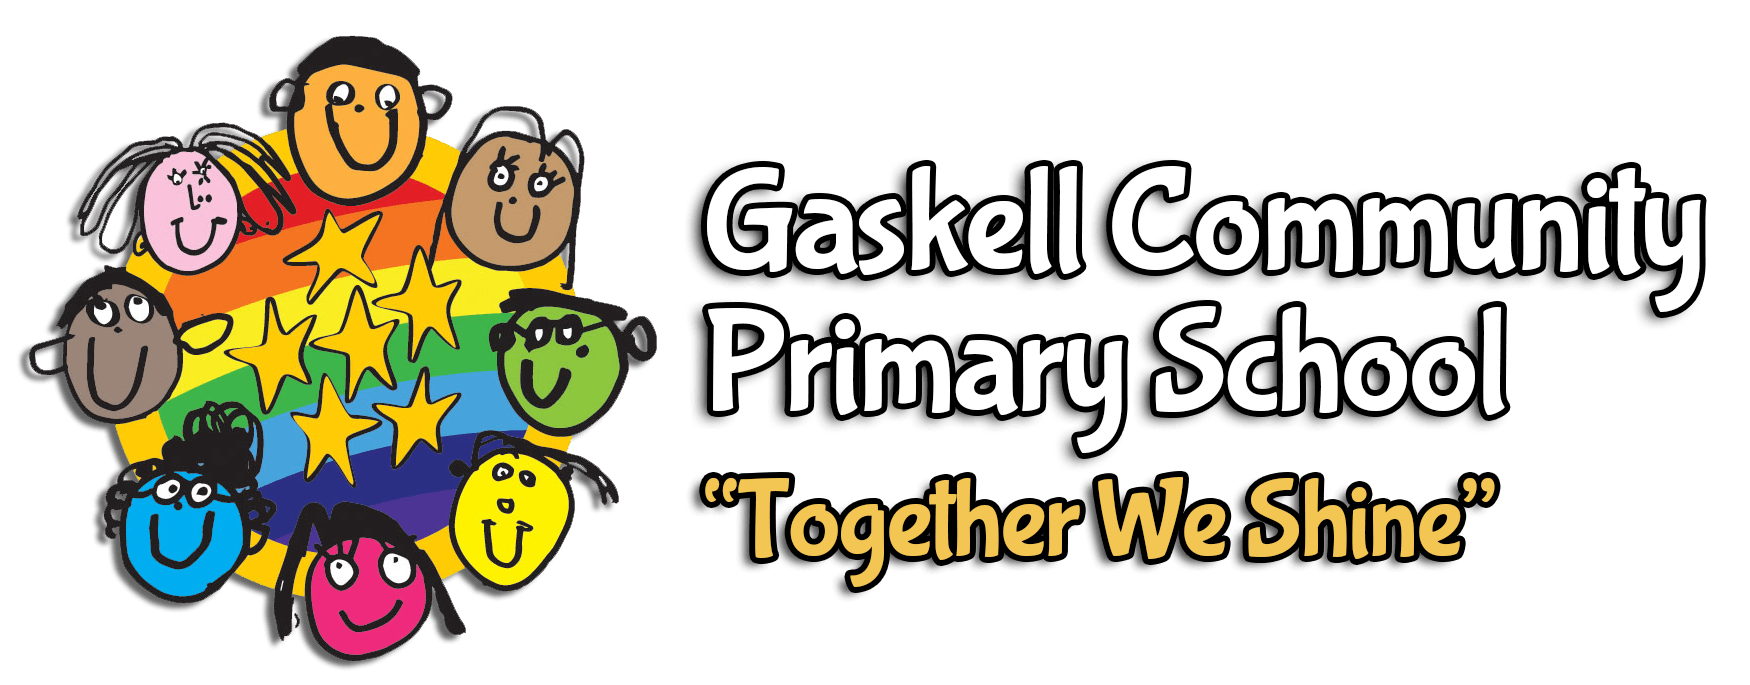 Gaskell Community Primary School